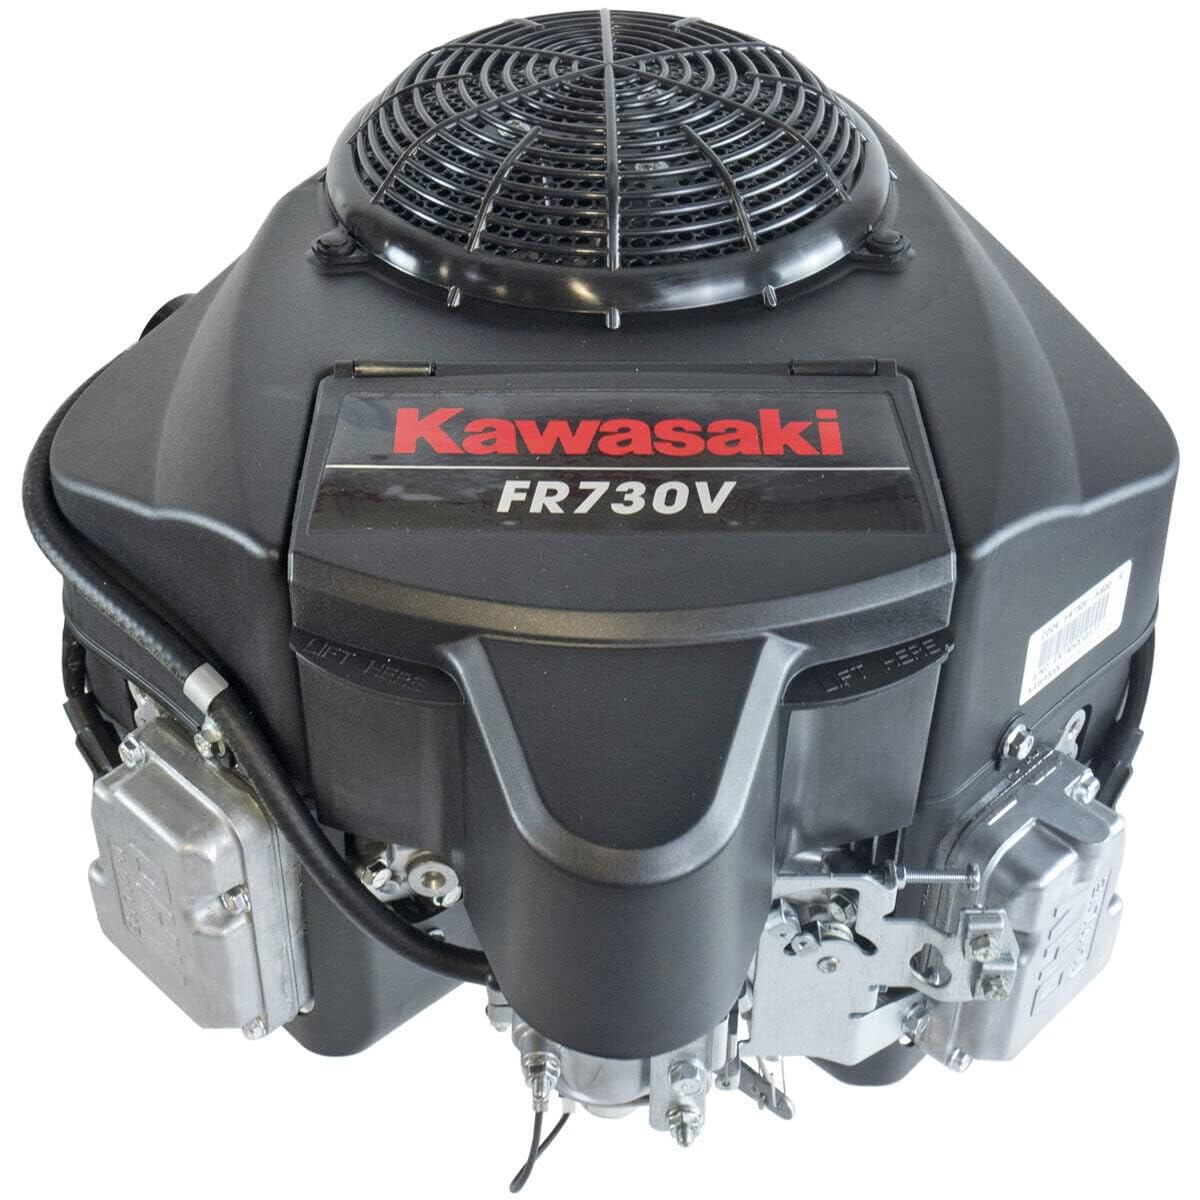 Kawasaki 24HP Replacement Engine #FR730VES16S